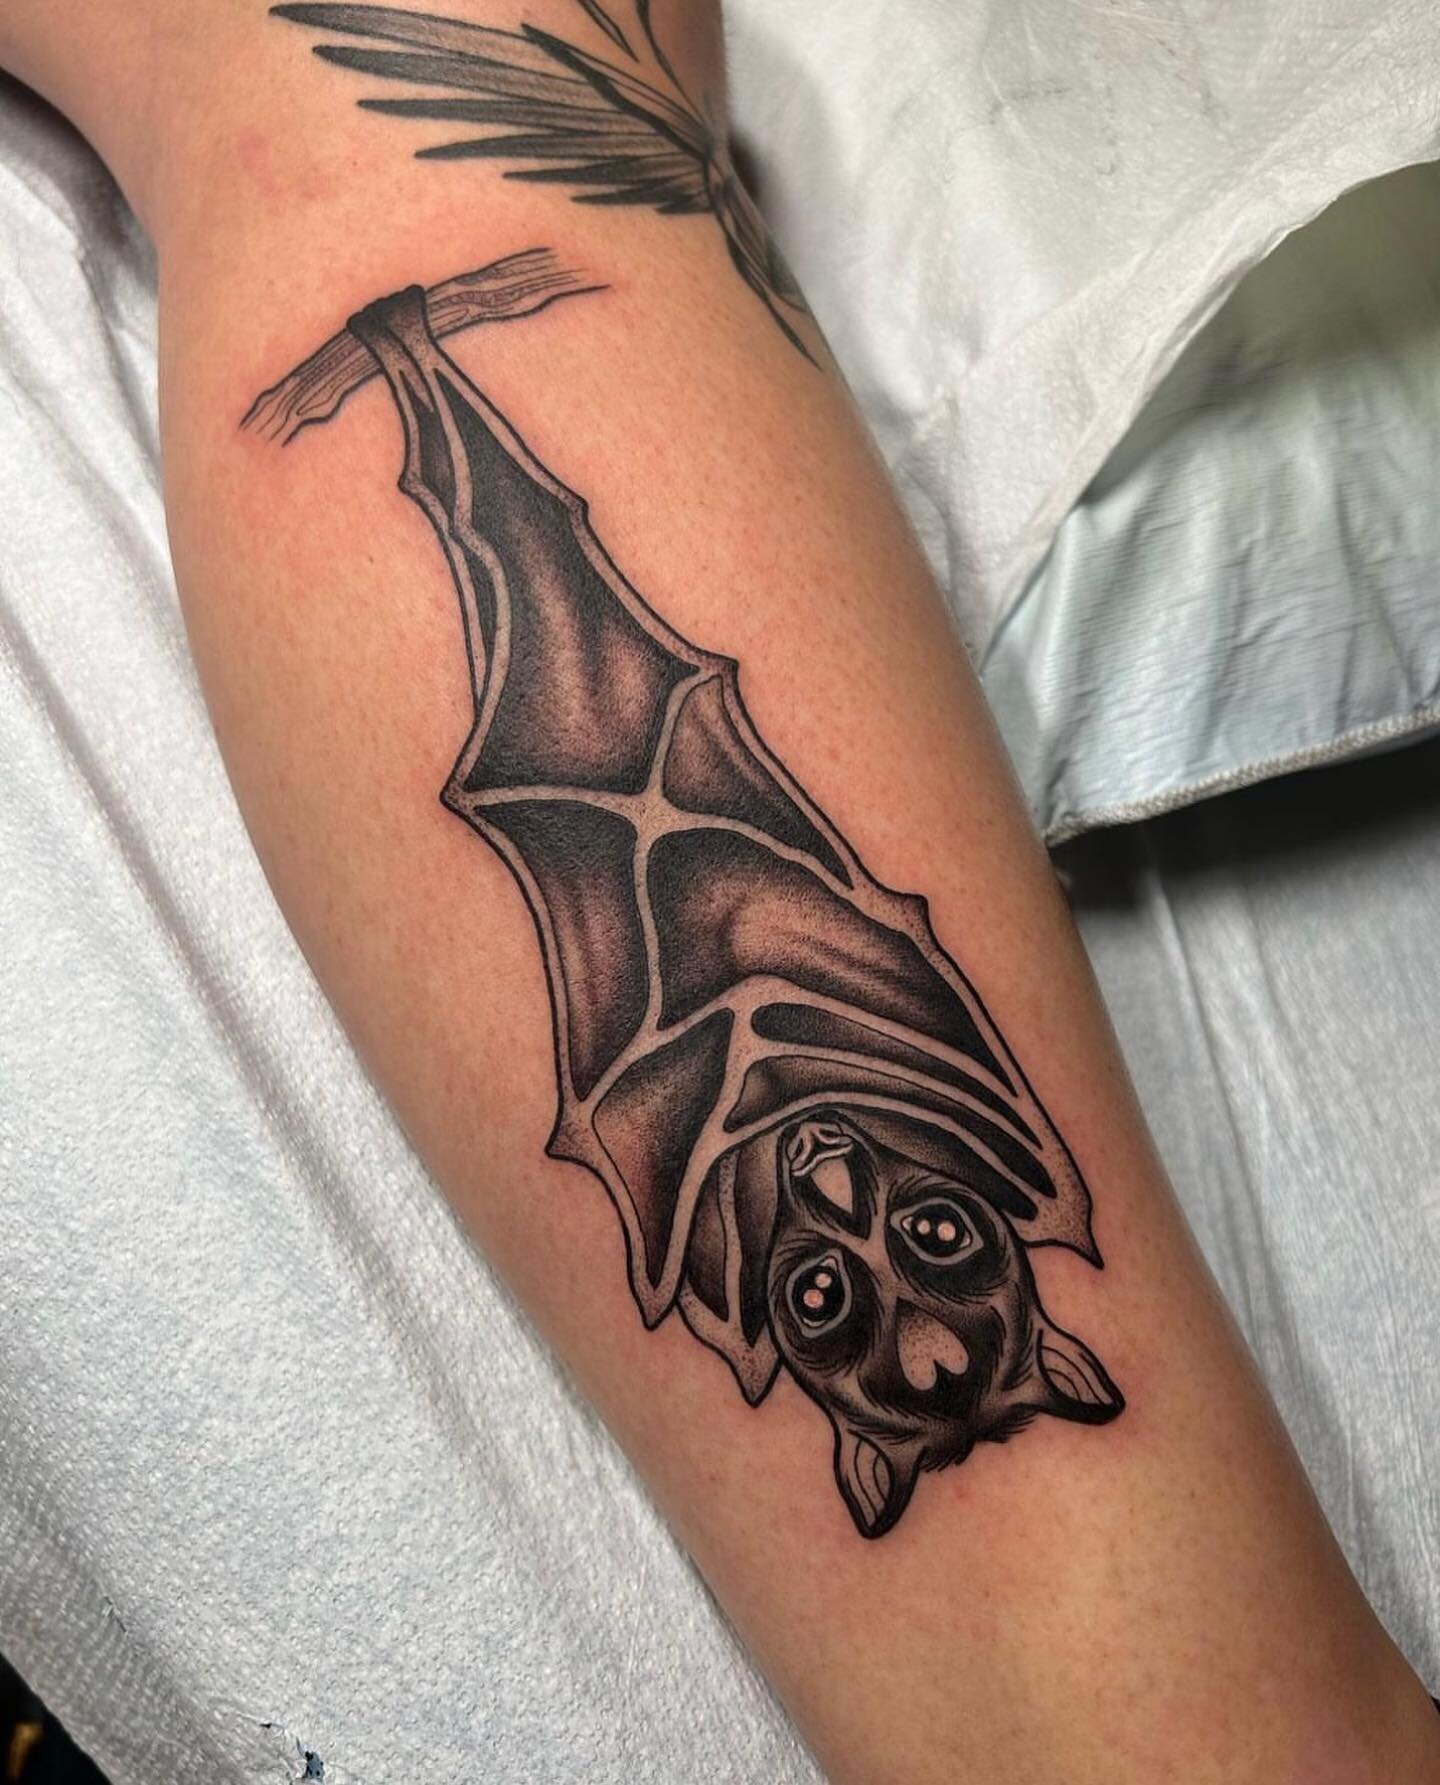 bat hanging upside down tattoo